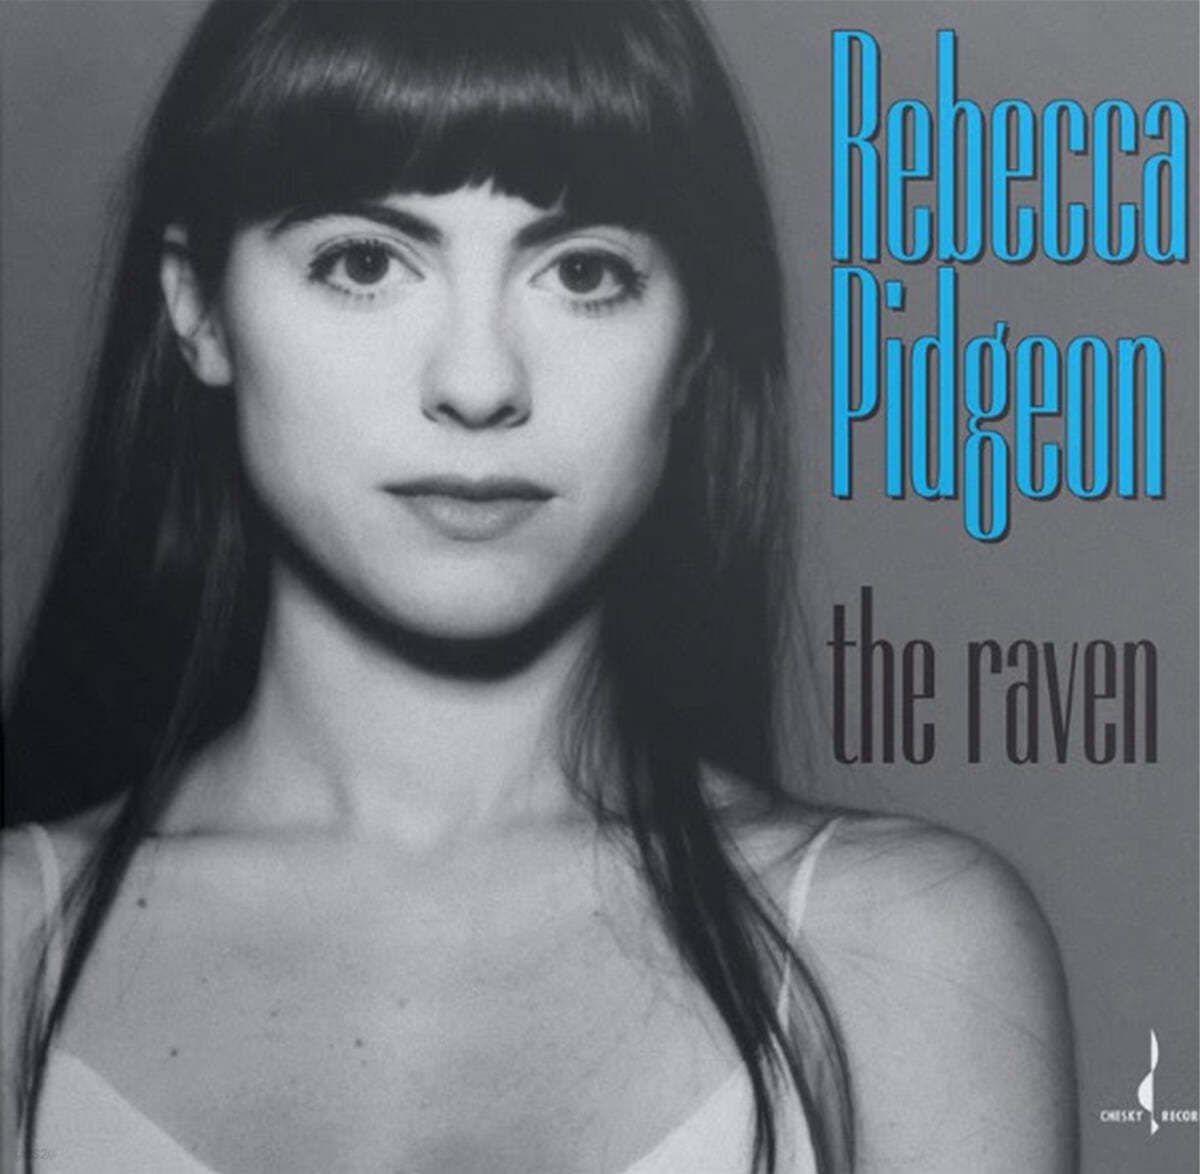 Rebecca Pidgeon (레베카 피존) - The Raven [LP]